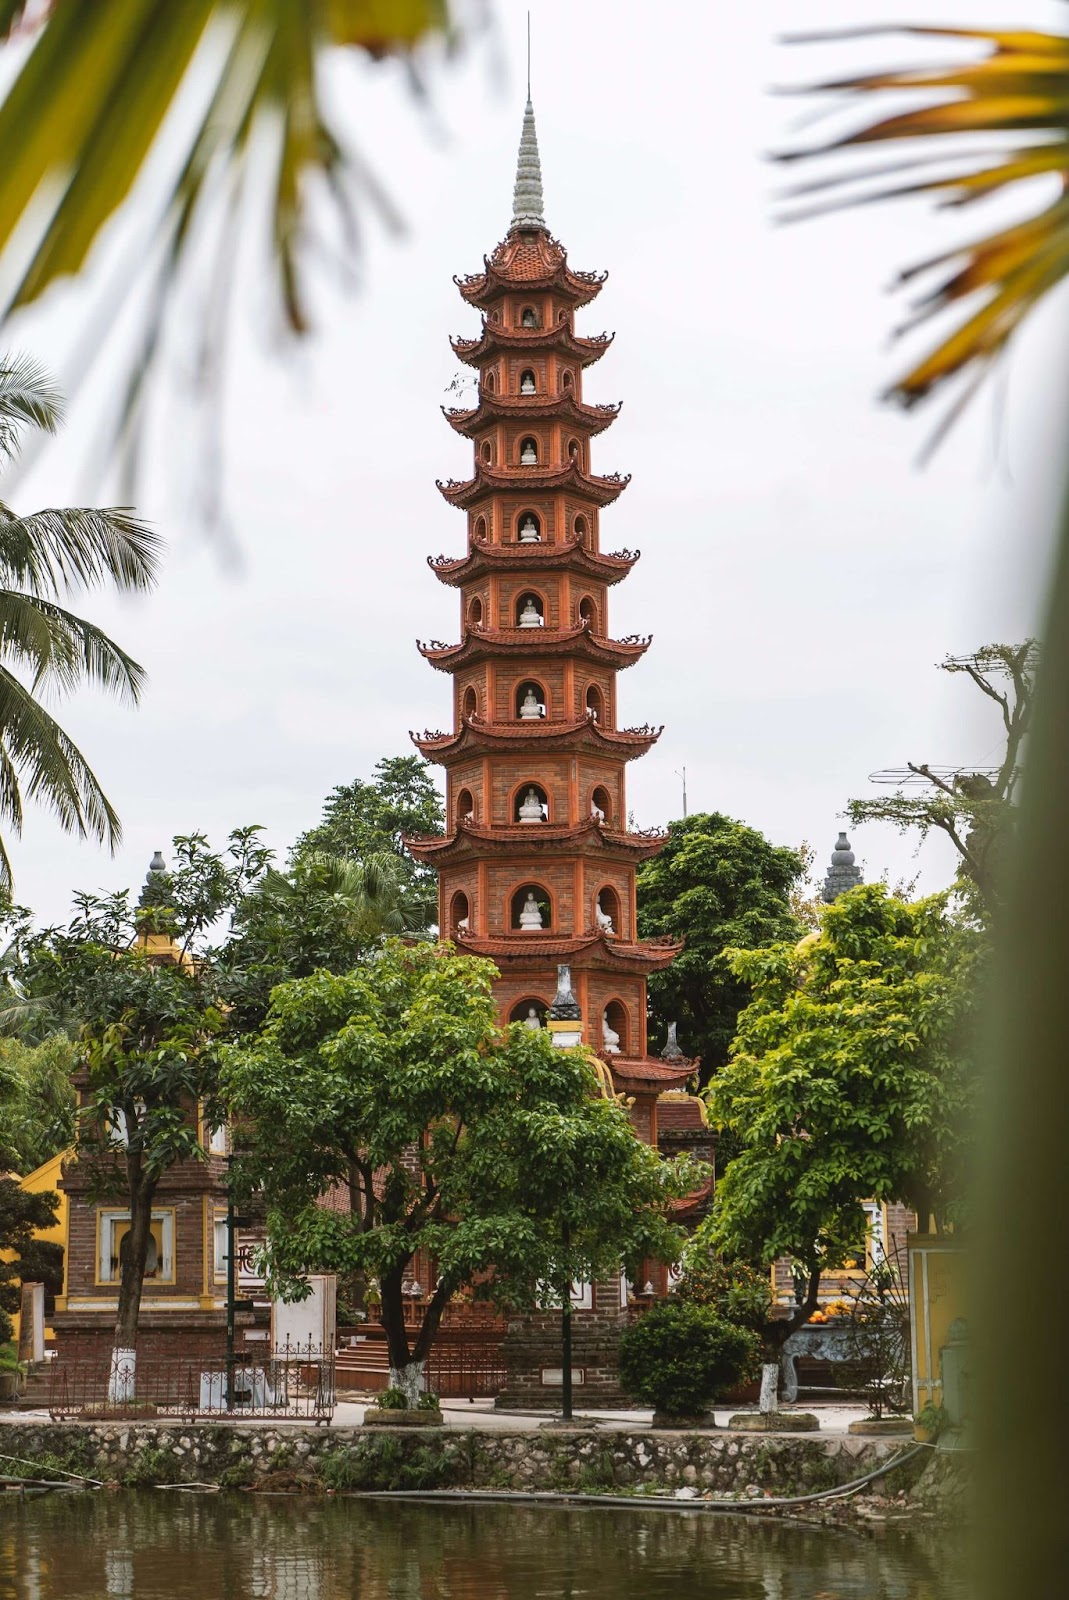 1 day in Hanoi, Tran Quoc Pagoda, oldest pagoda in Hanoi